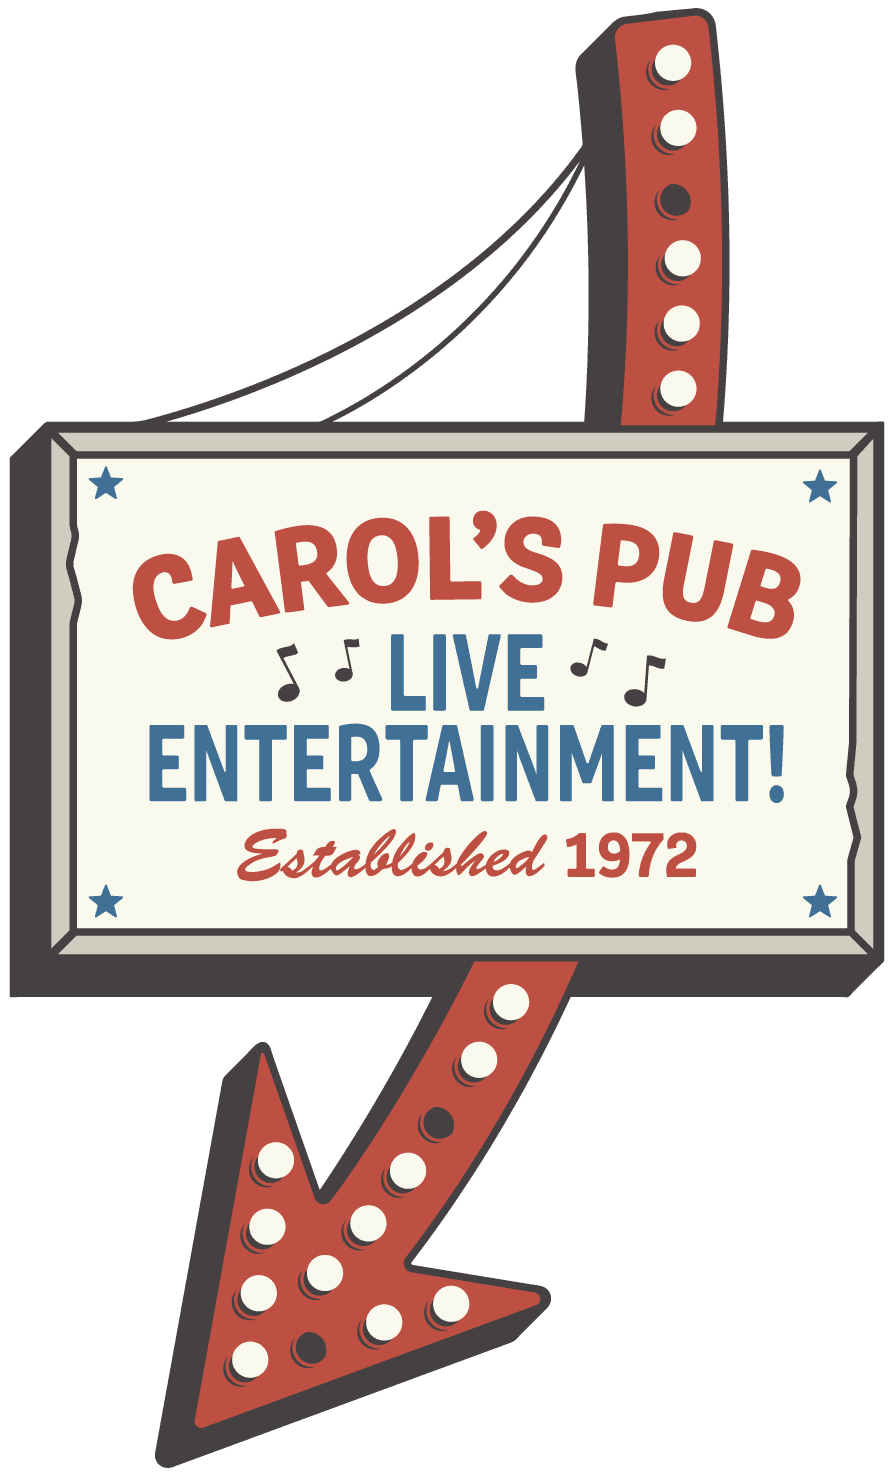 Carol's Pub arrow logo